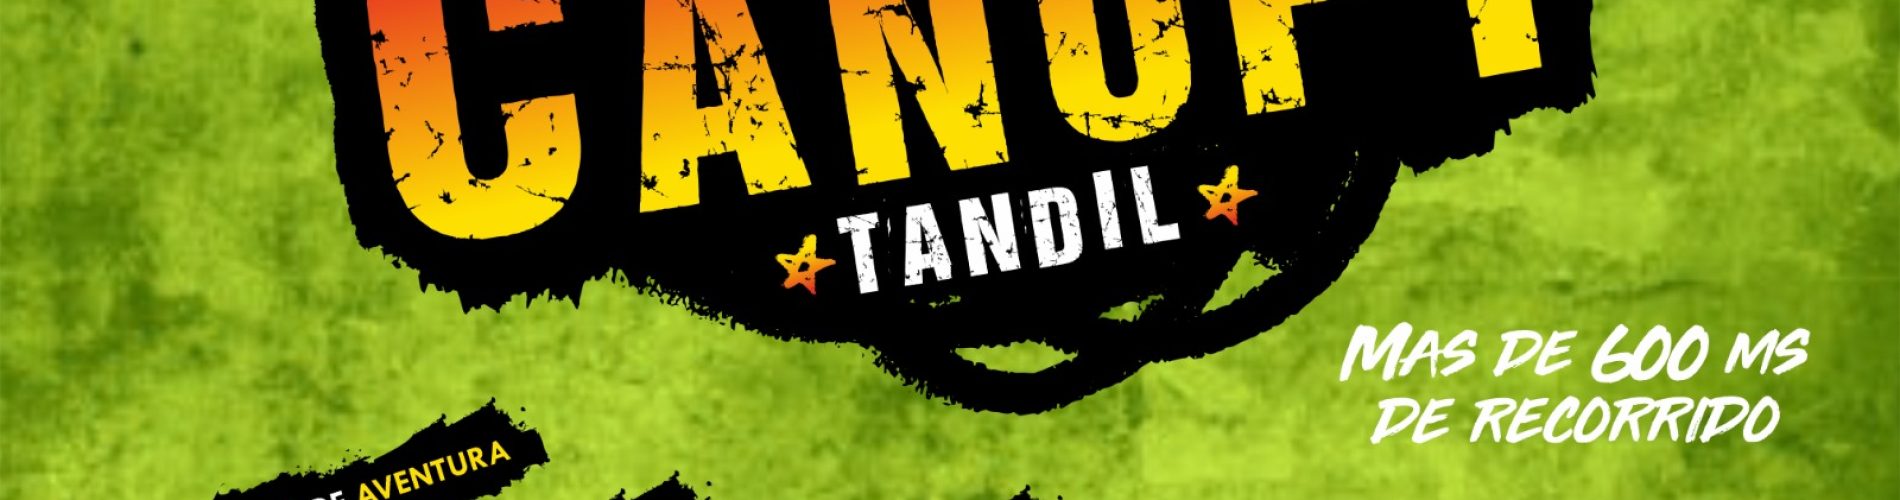 Canopy Tandil